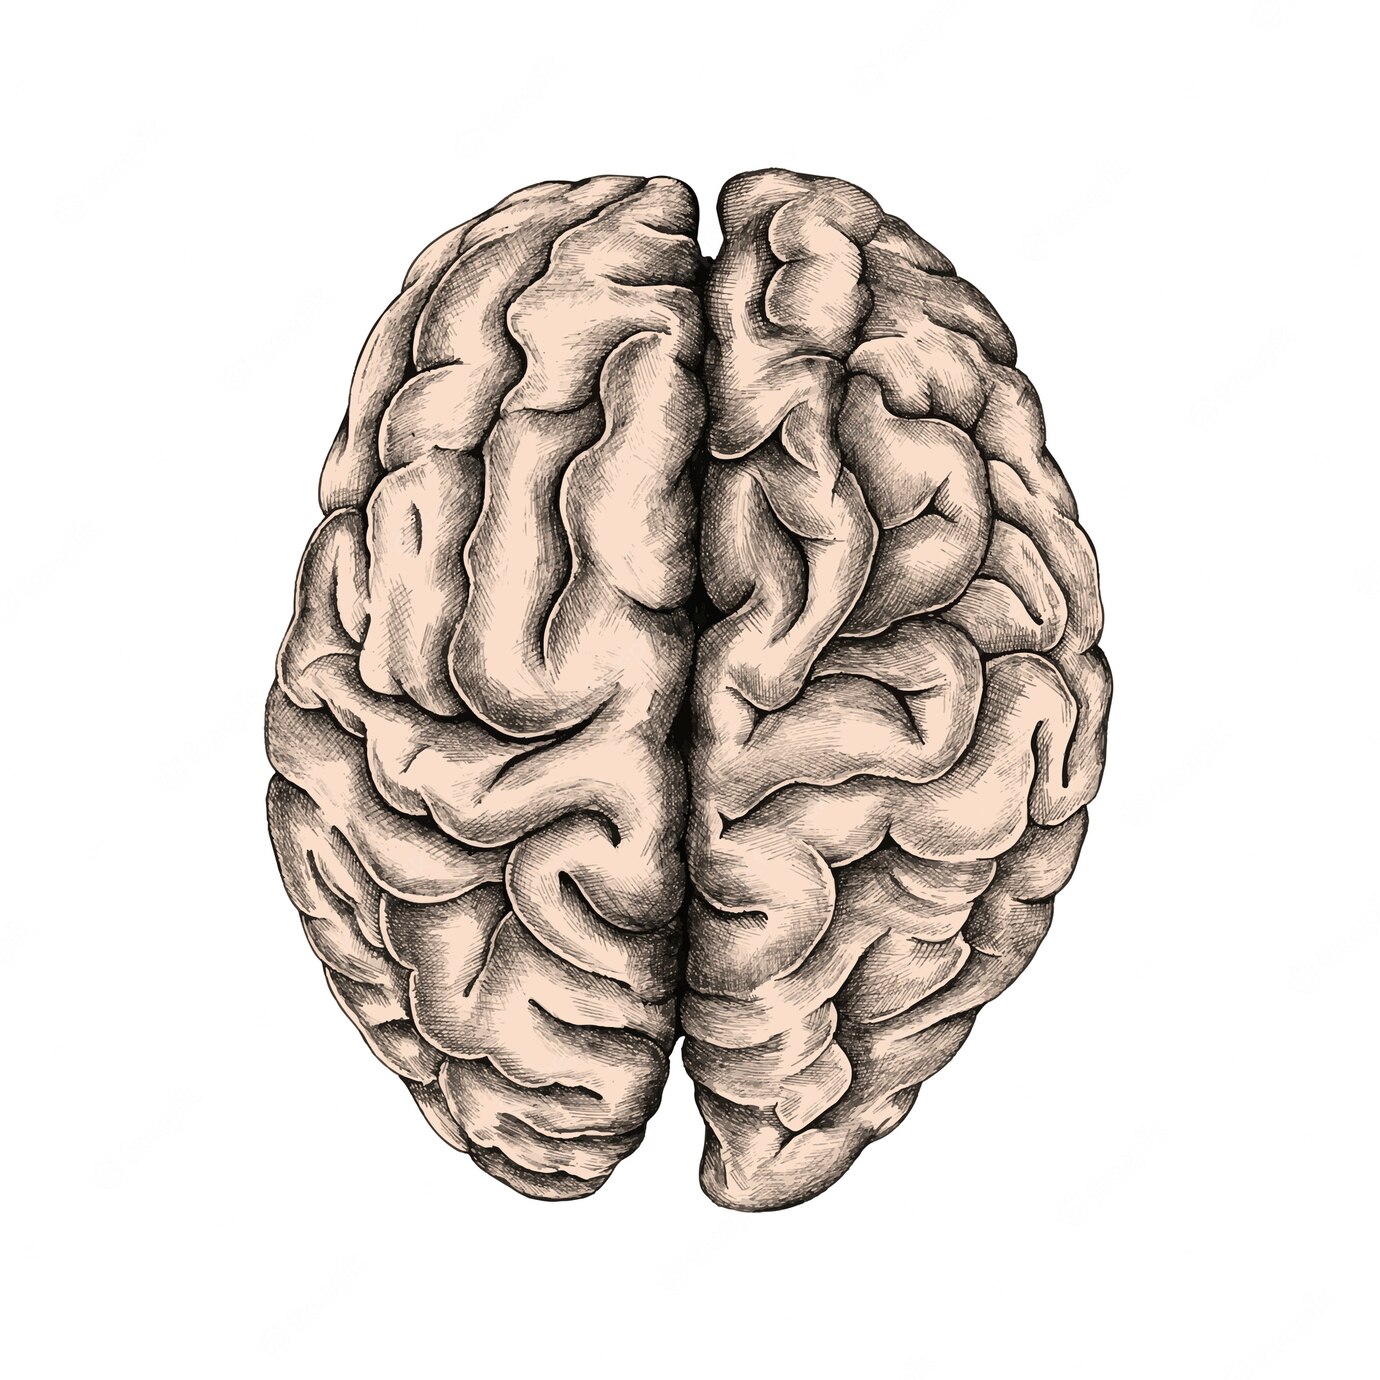 Hand Drawn Human Brain 53876 15780